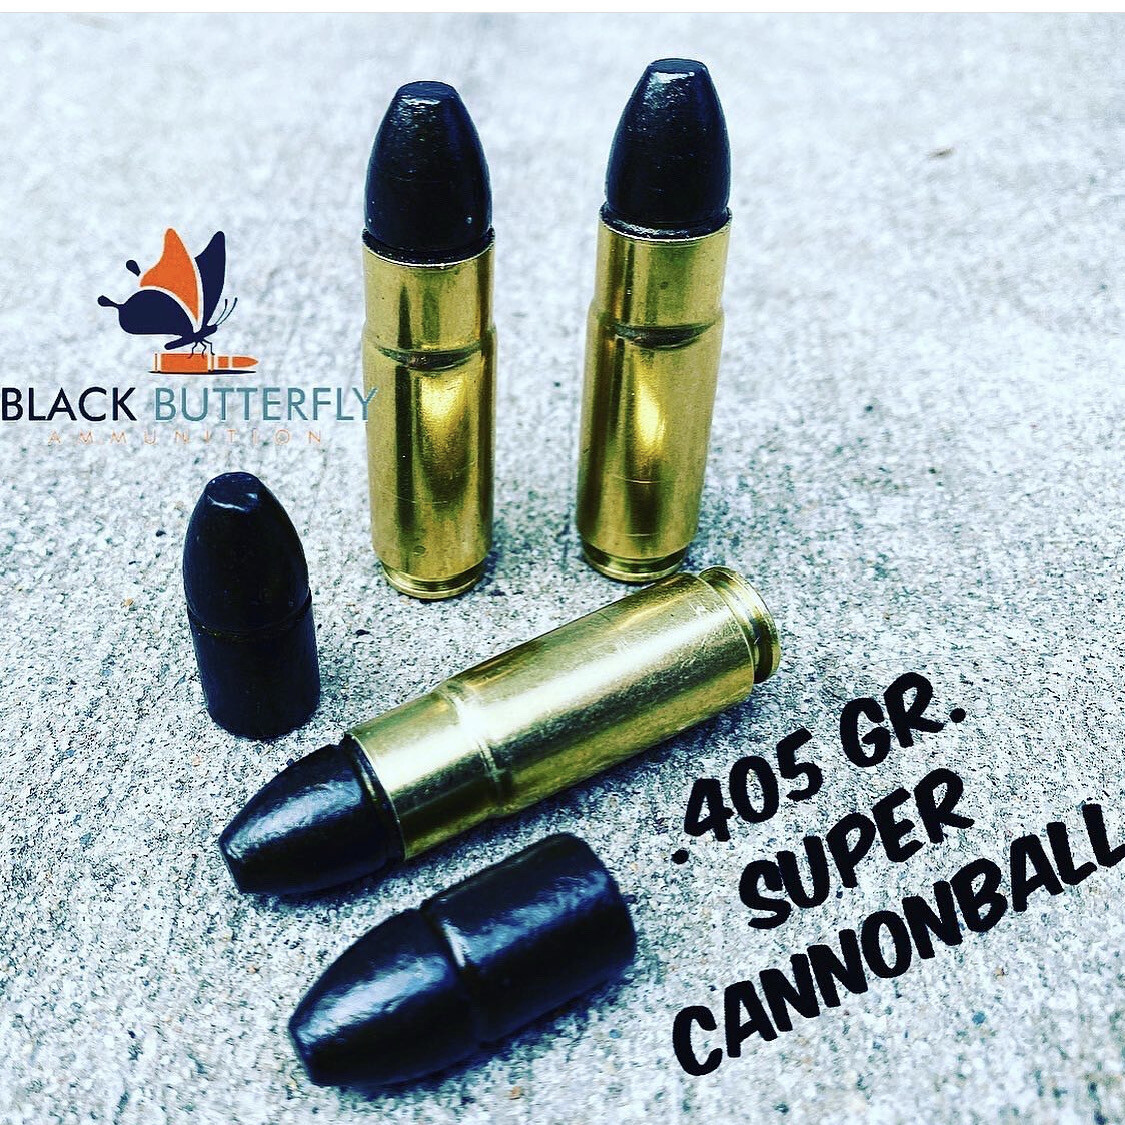 Black Butterfly Ammunition Premium, .458 SOCOM, 405 gr, 20 Rounds, Hi-Tek Coated Lead "SUPER CANNONBALL"